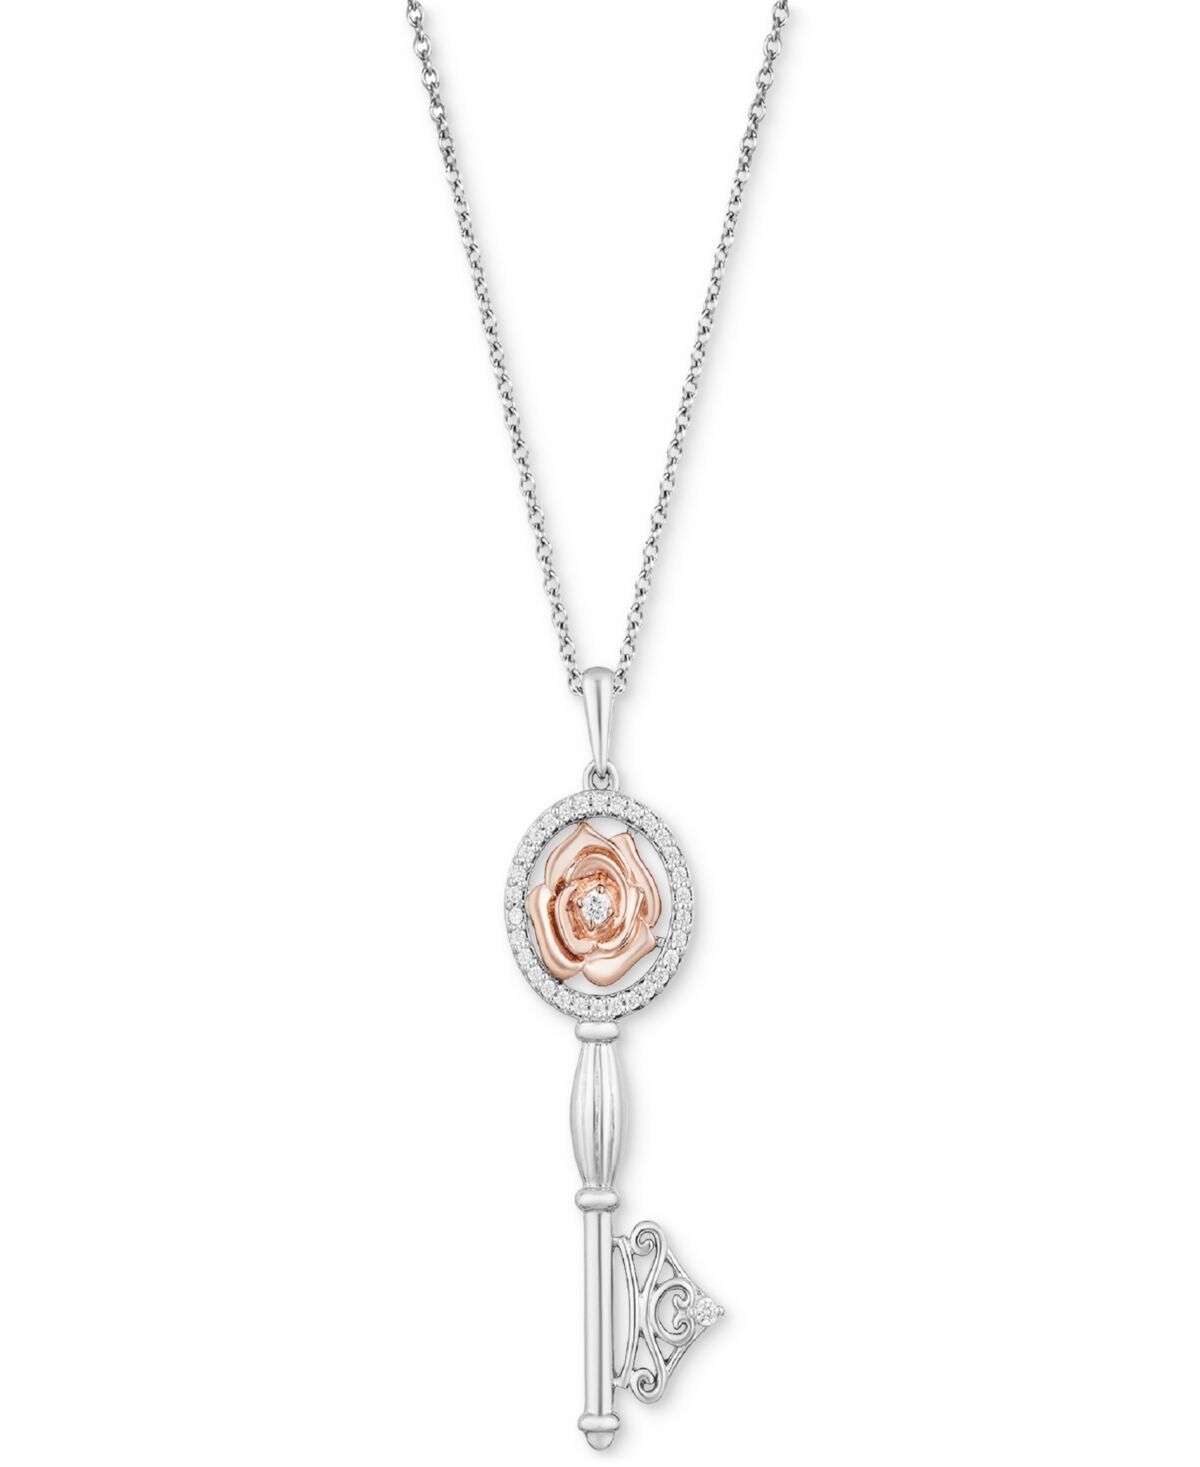 Disney Enchanted Disney Fine Jewelry Diamond Belle Rose Key Pendant Necklace (1/6 ct. t.w.) in Sterling Silver & 14k Rose Gold-Plate - Two-Tone